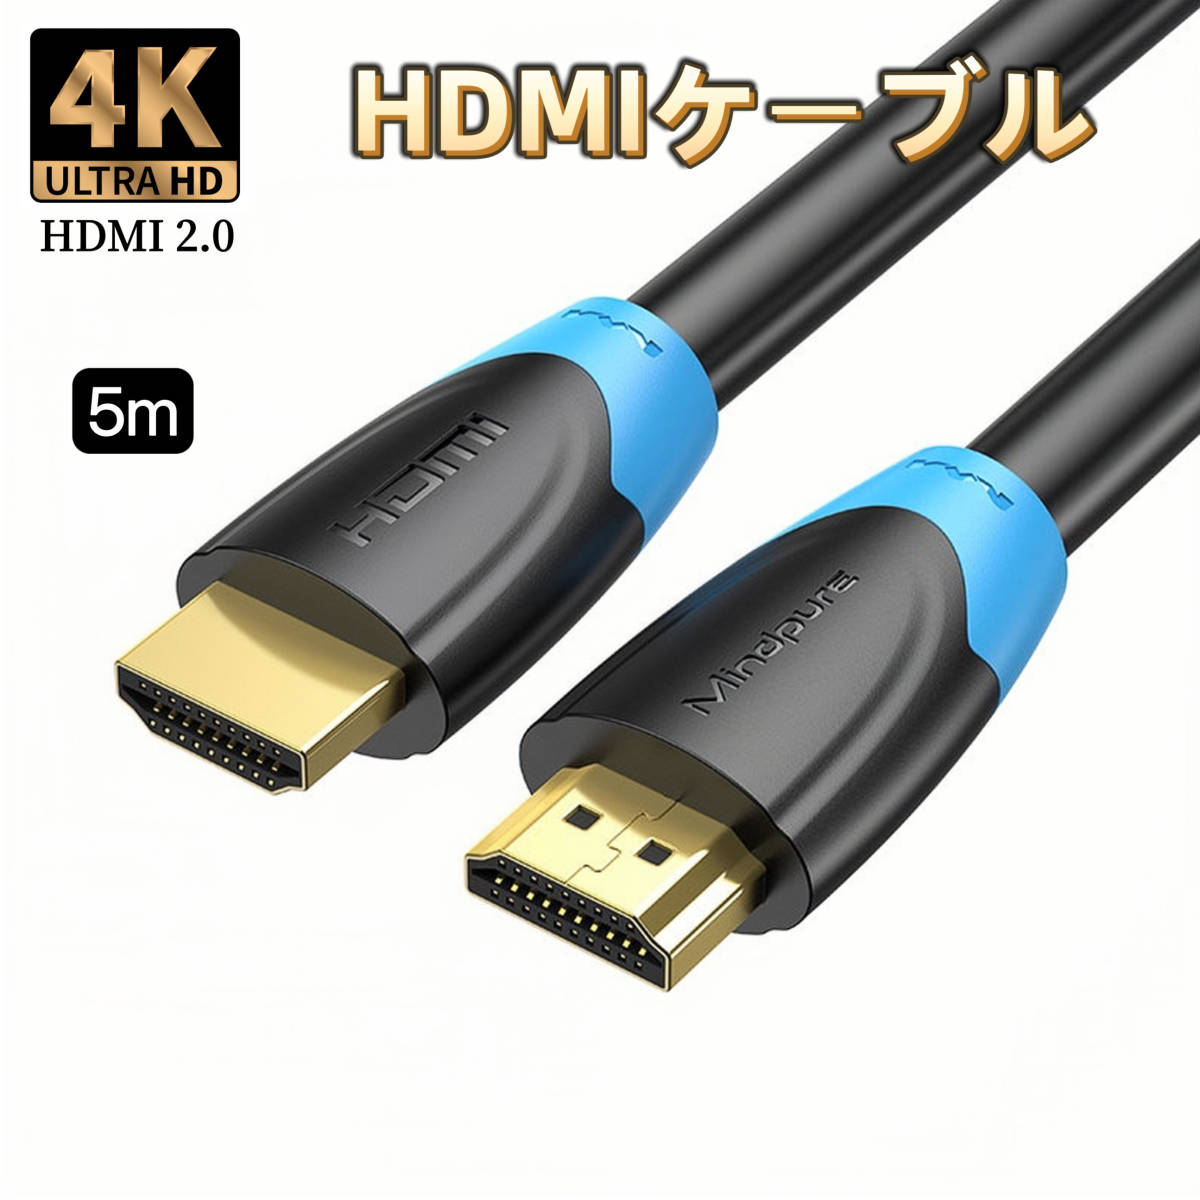 HDMIケーブル 4K 5m 2.0規格 ハイスピード HDMI ケーブル AVケーブル 業務用 Xbox PS3 PS4_画像1